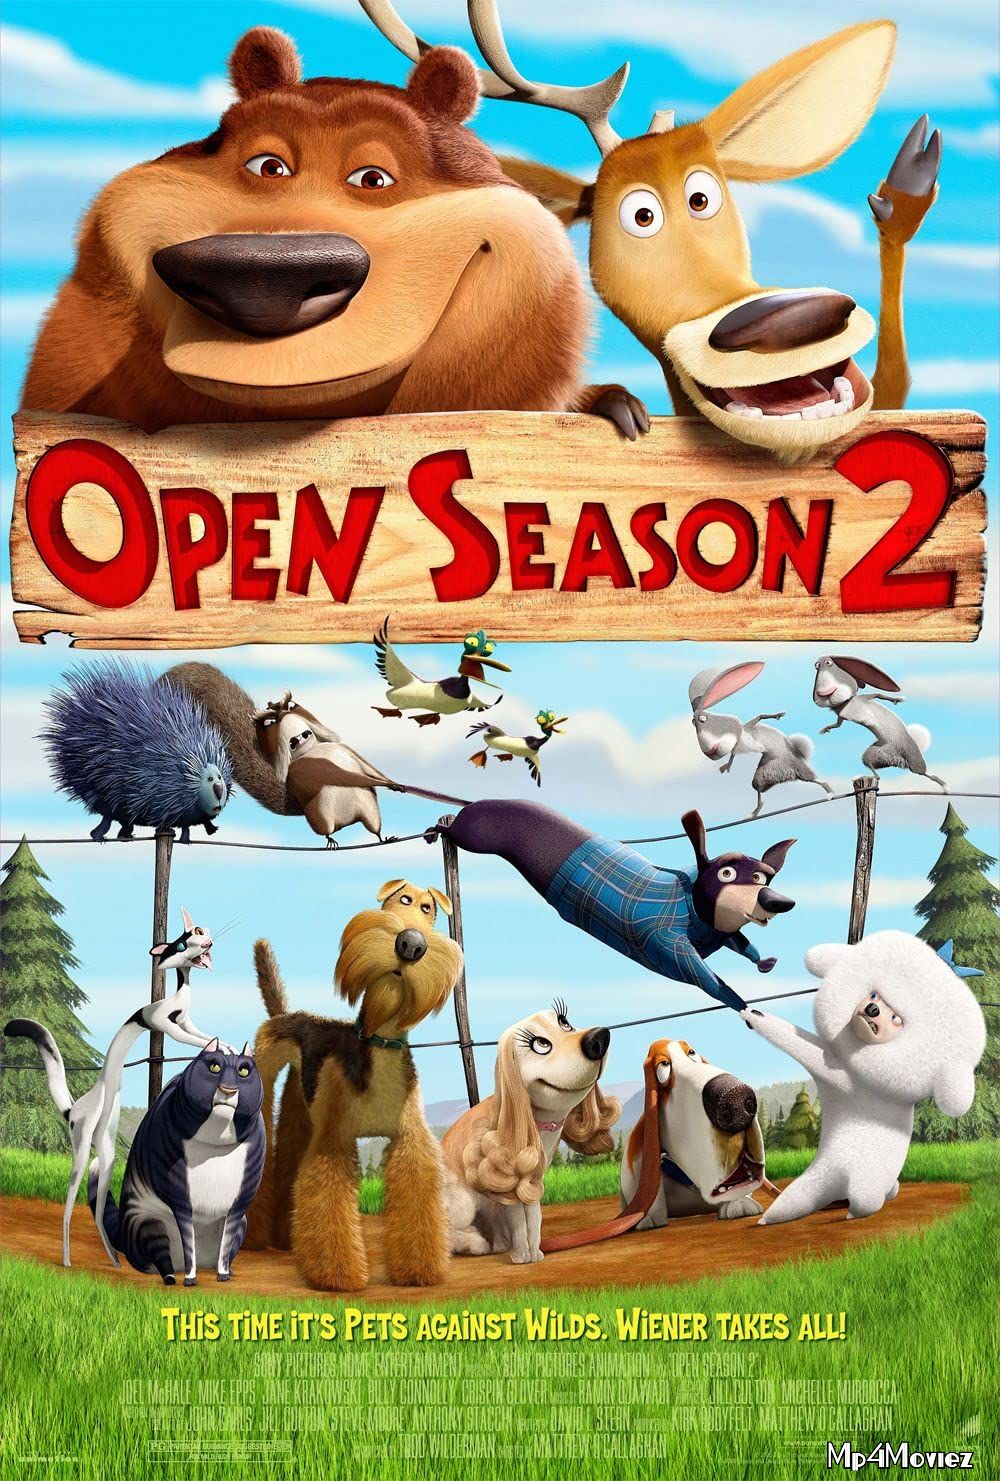 Open Season 2 (2008) Hindi Dubbed BRRip download full movie